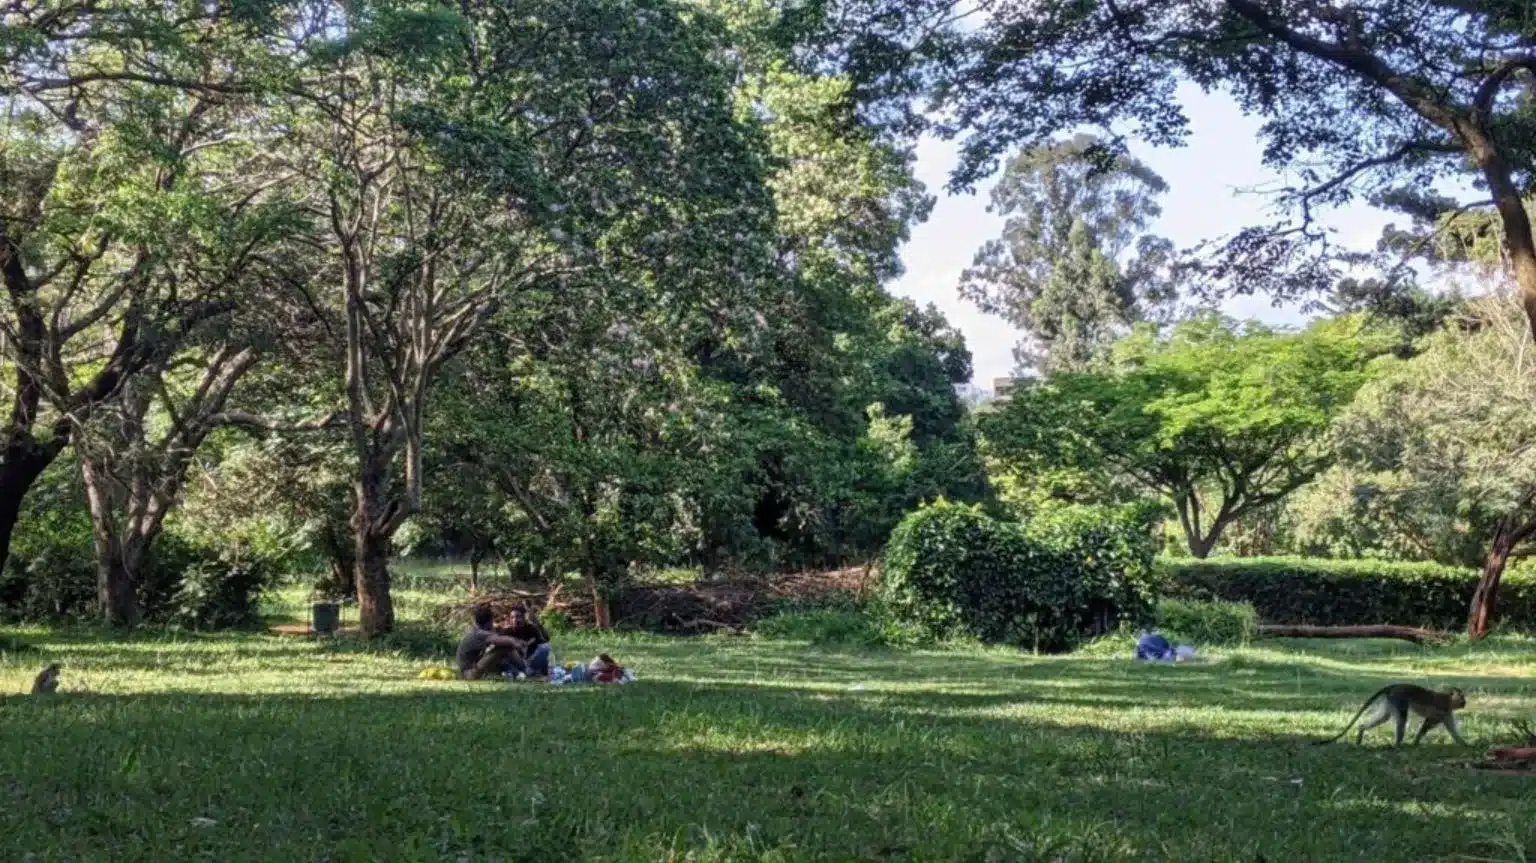 Picnic at the Nairobi Arboretum